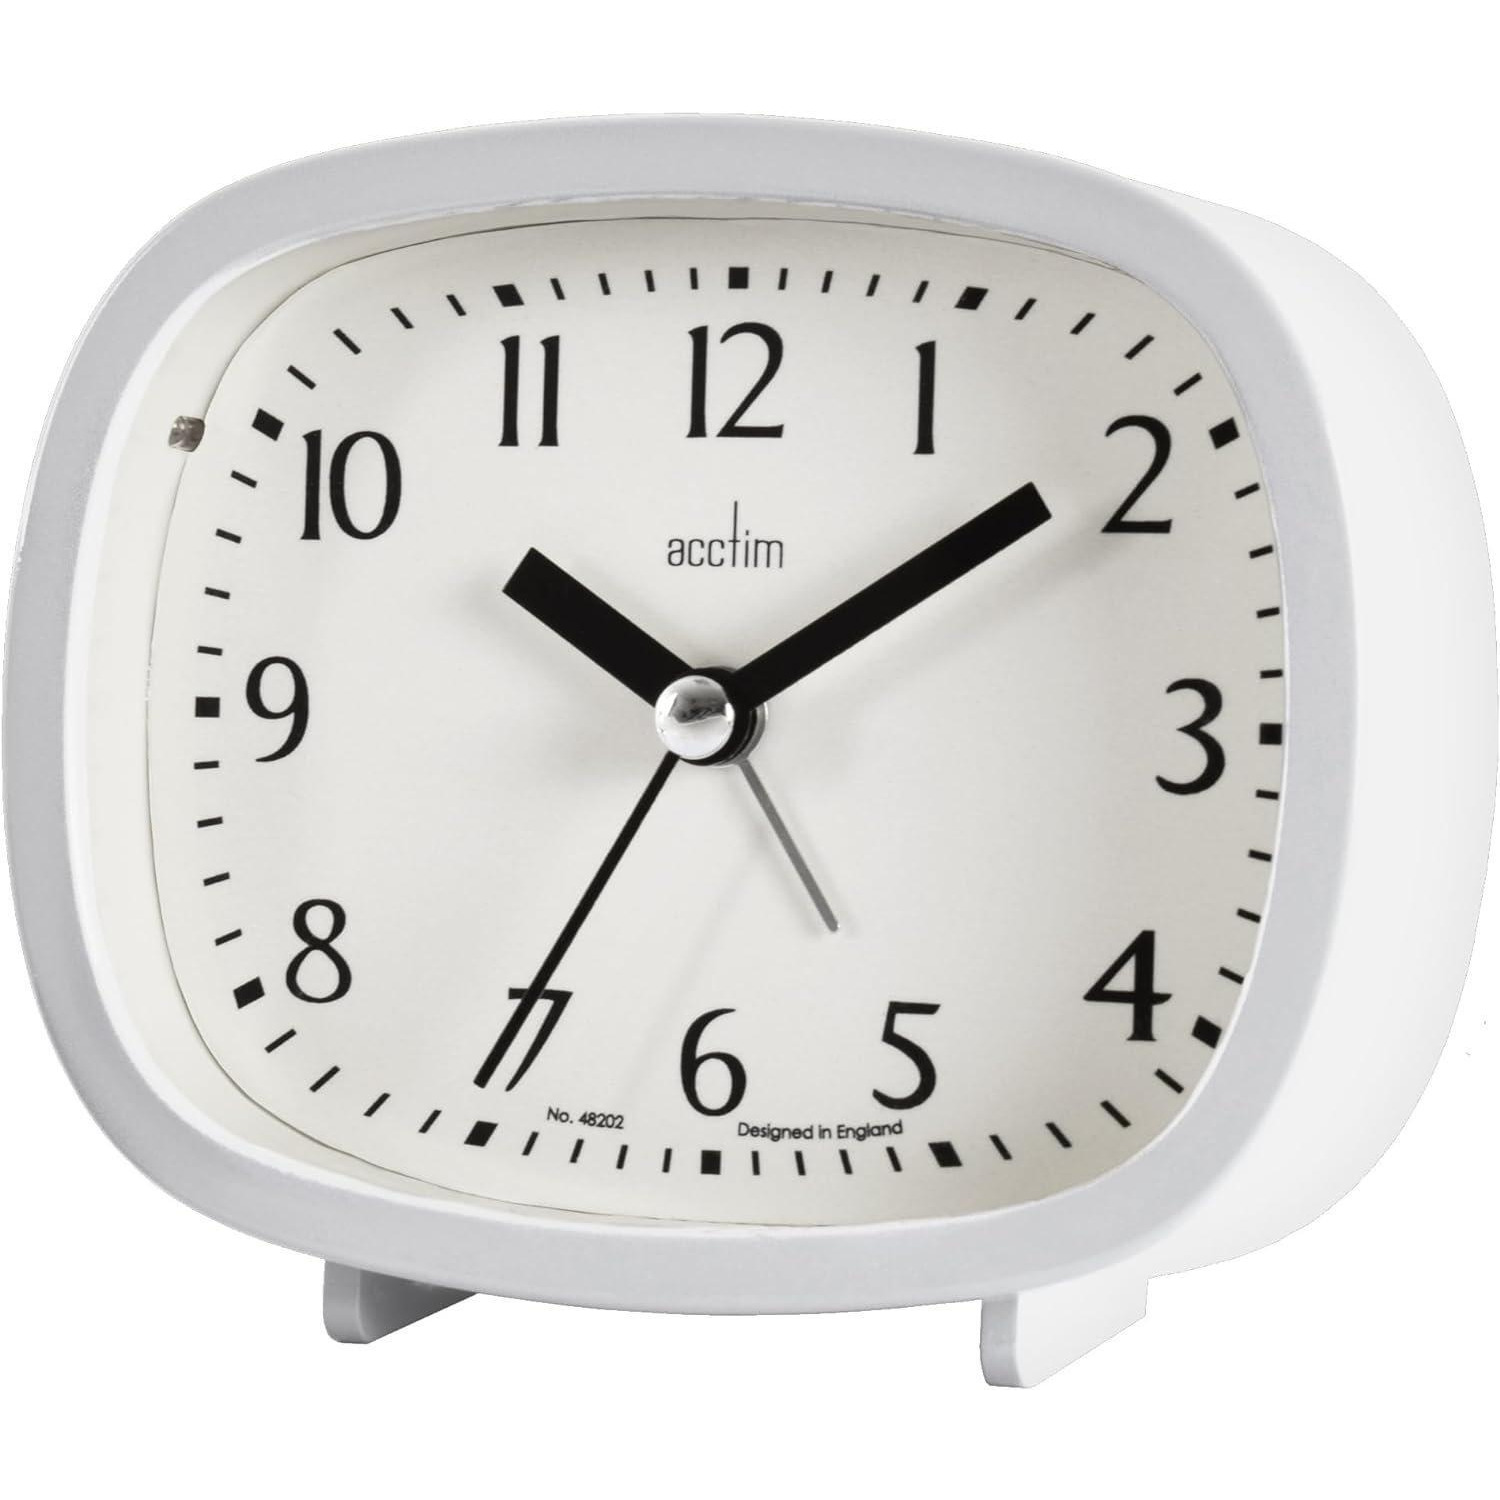 Hilda Analogue Alarm Clock Non Ticking Sweep Crescendo Alarm with Backlight - image 1